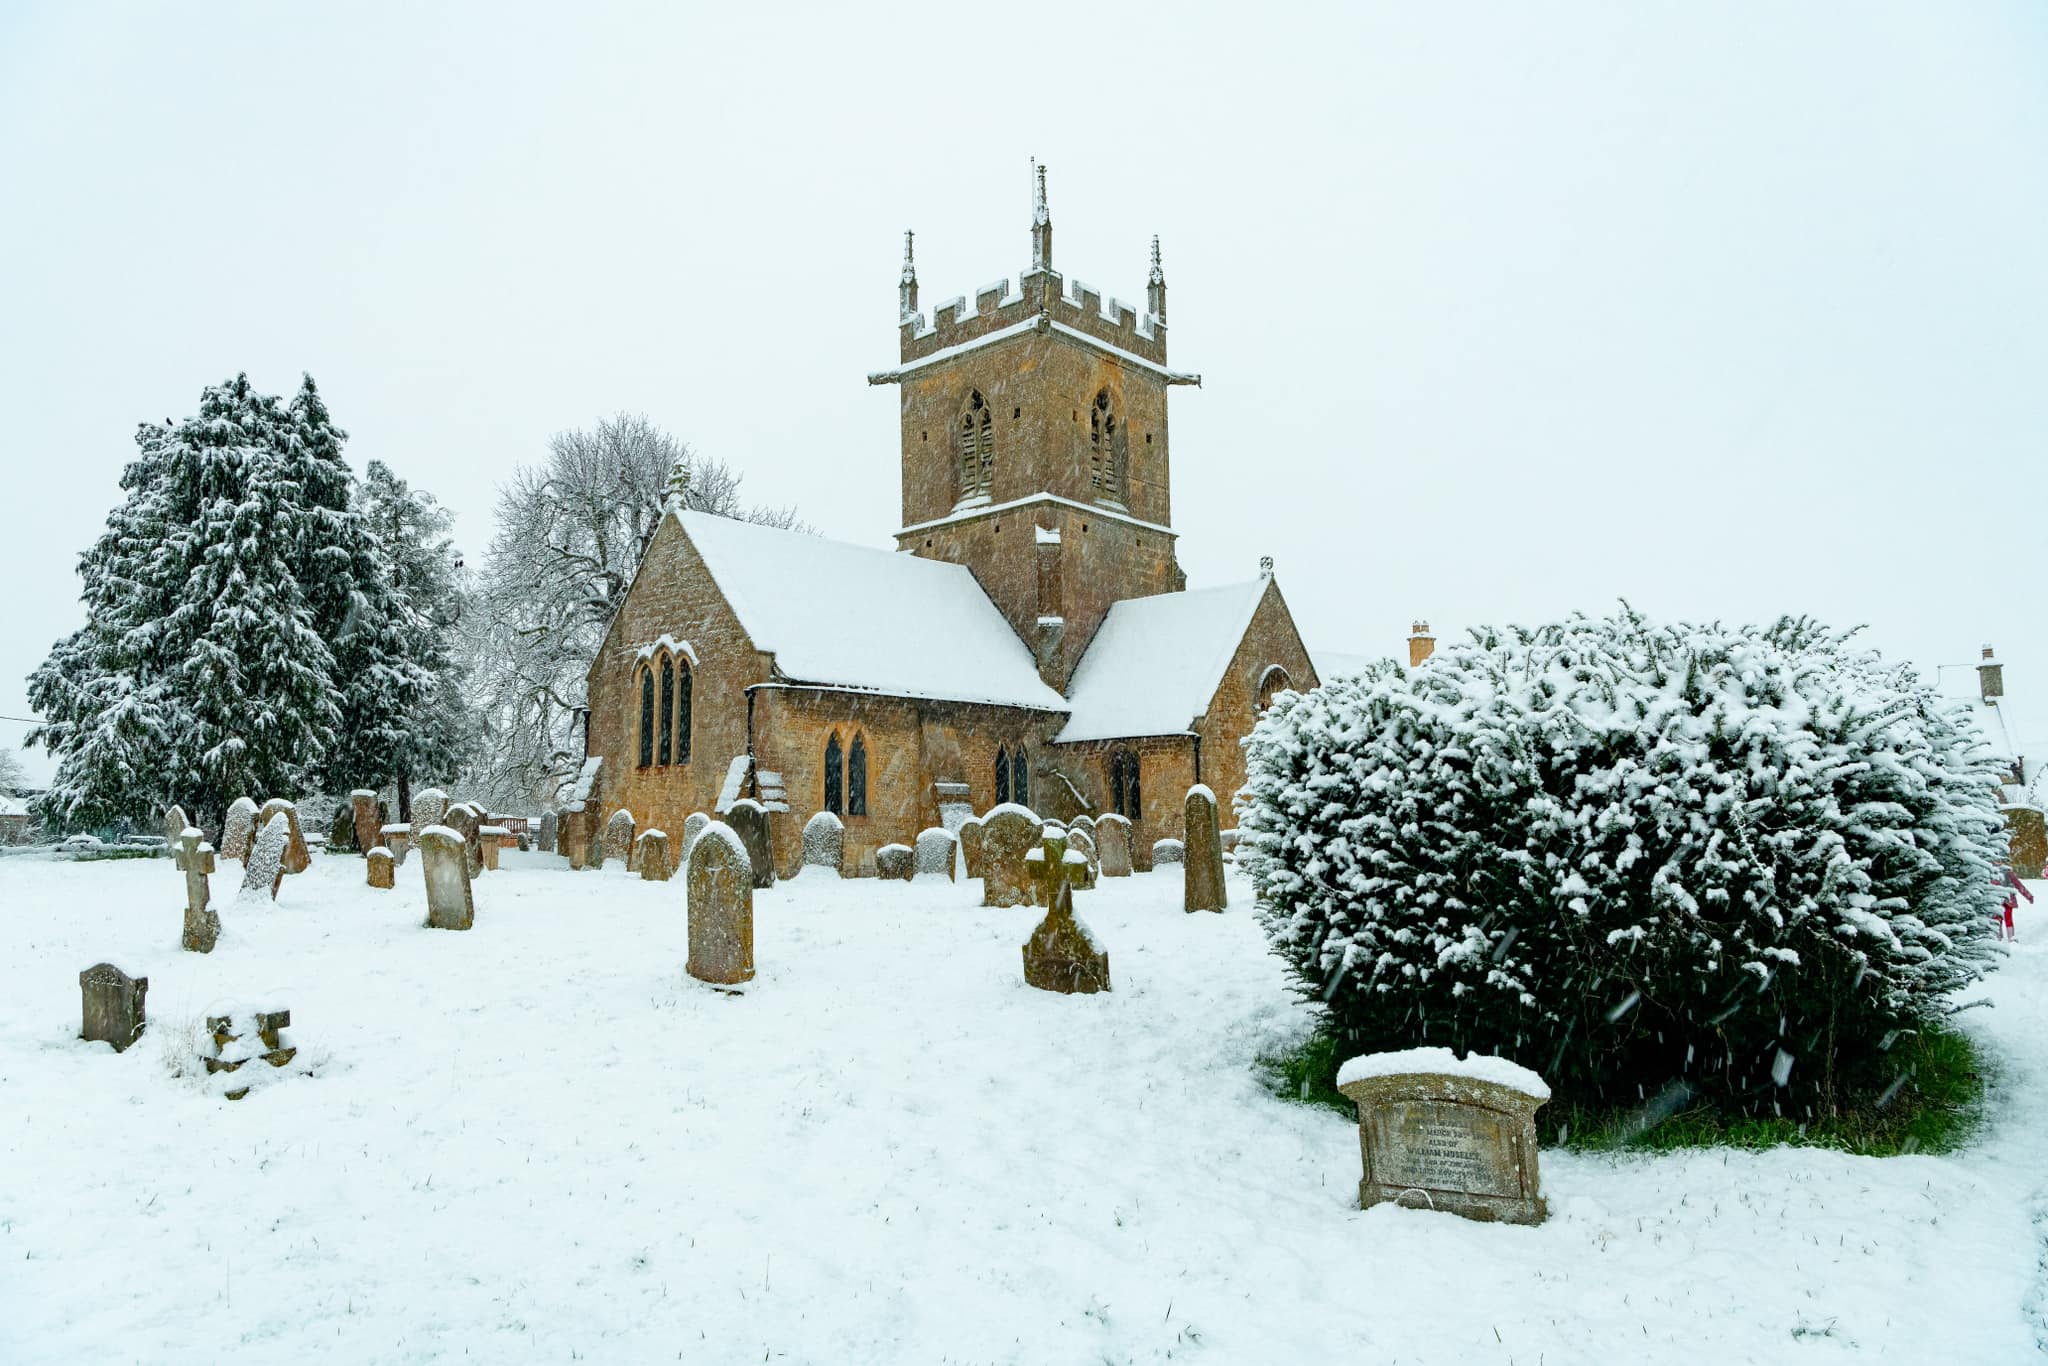 St Peter's in Snow 2022 december